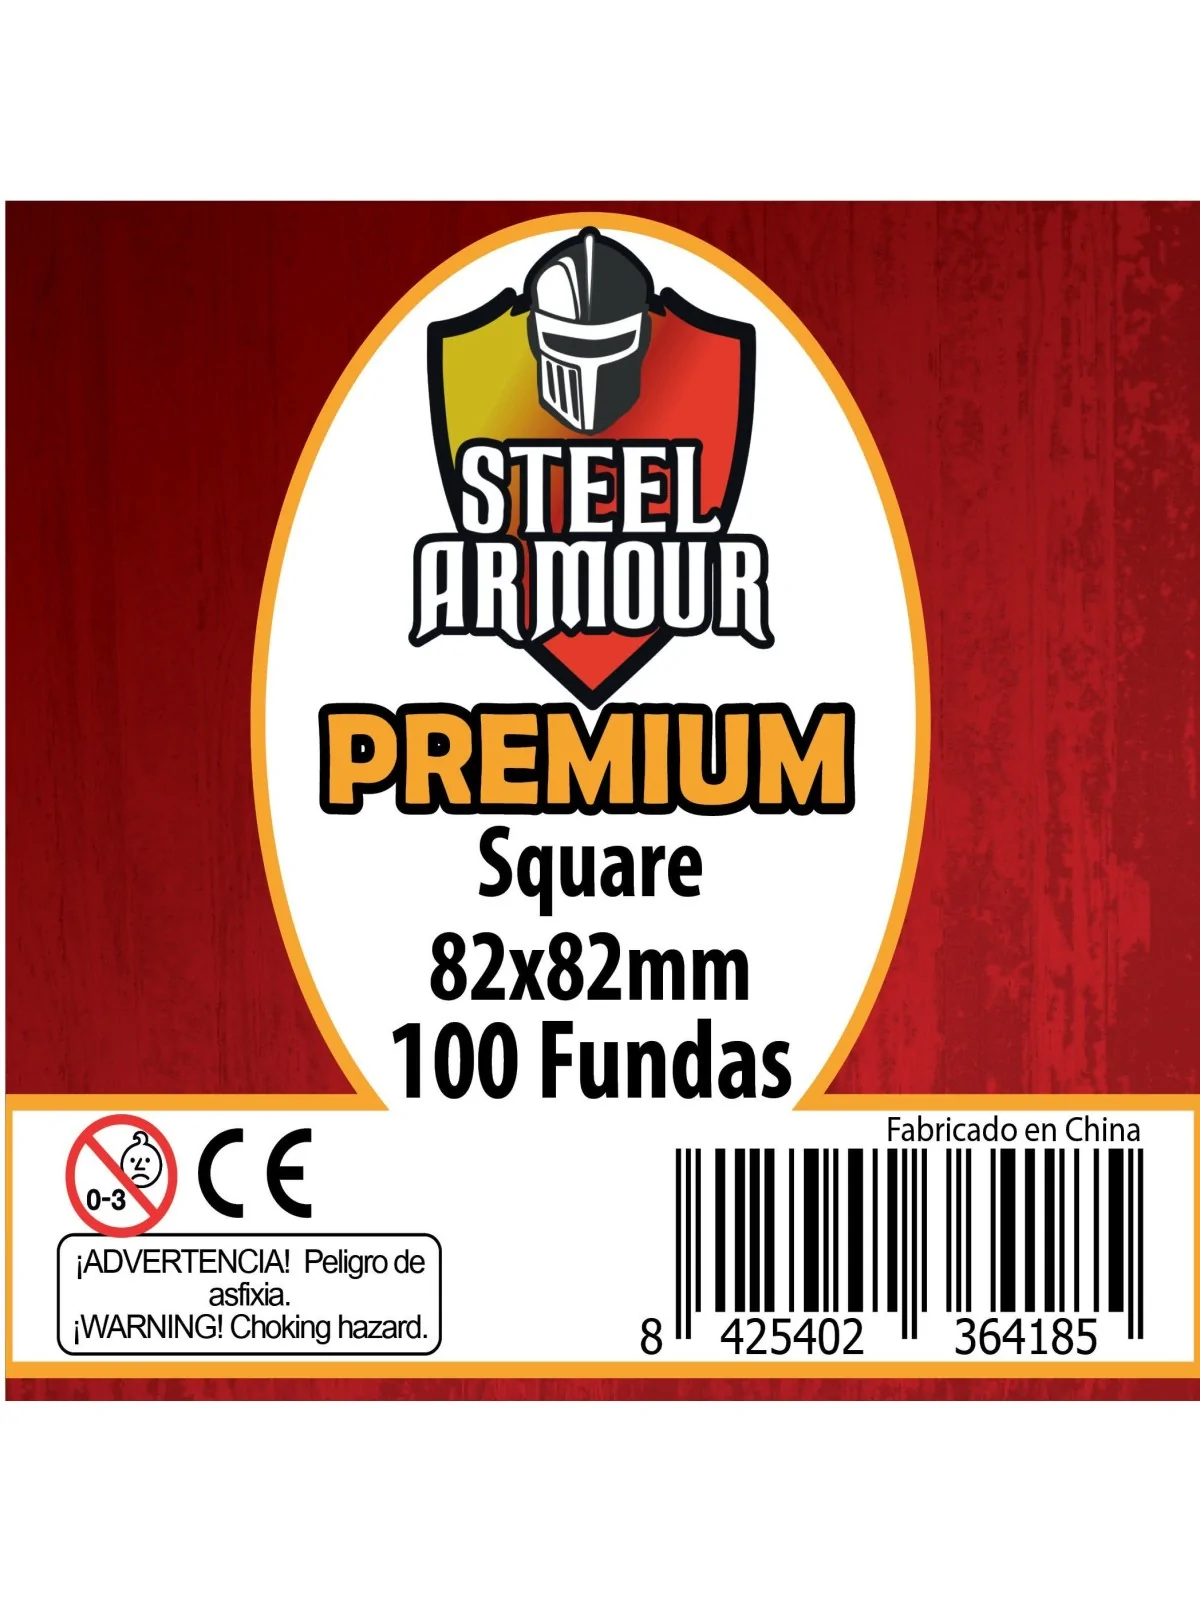 Comprar Steel Armour Square Premium (Pack of 100) (82x82mm) barato al 